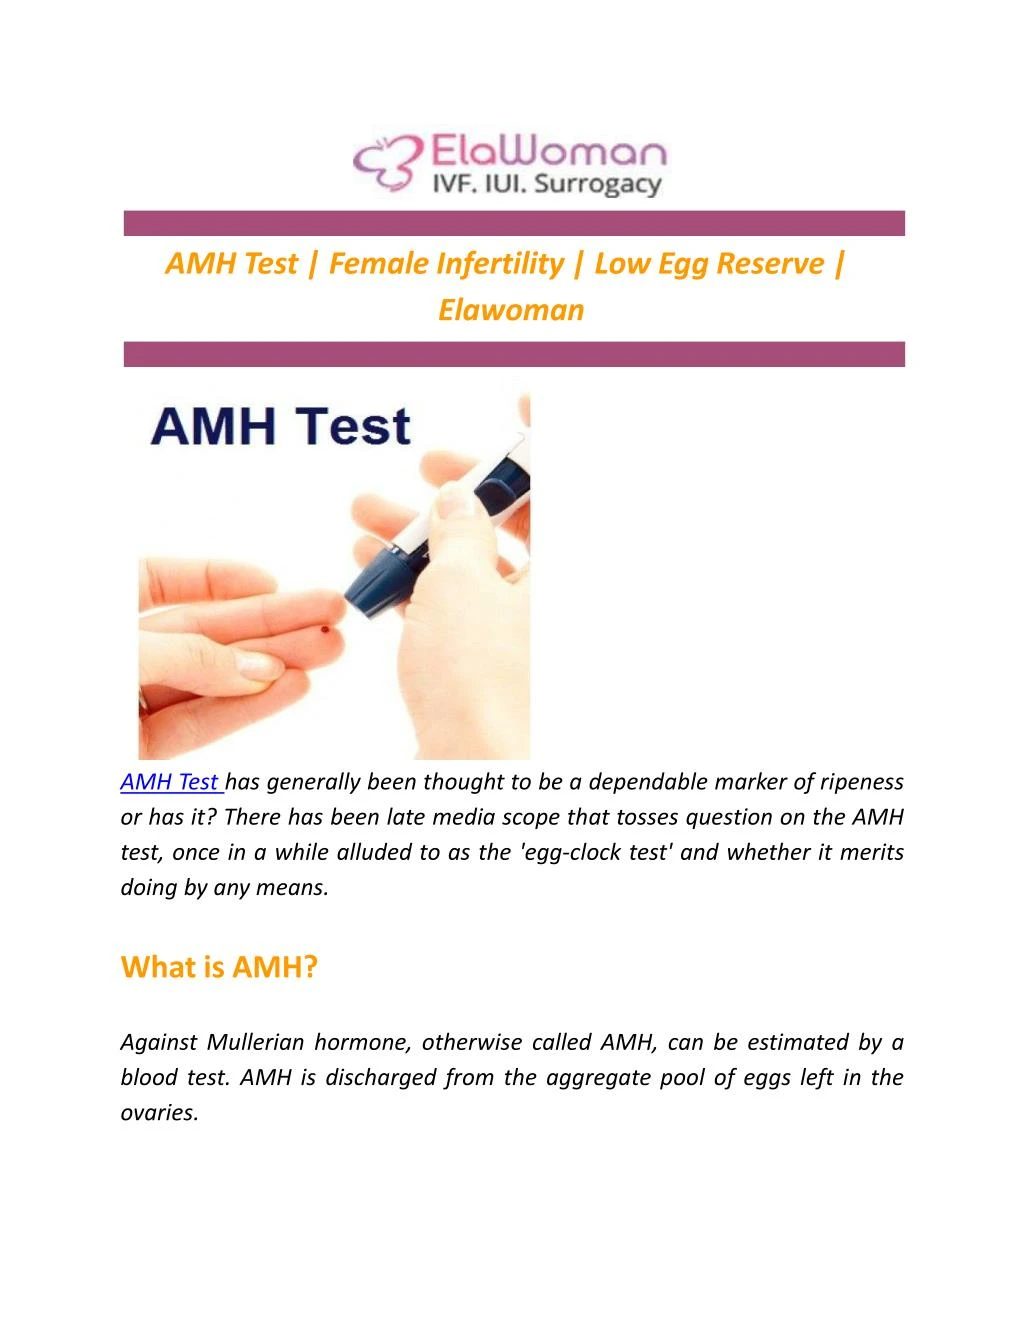 amh test female infertility low egg reserve